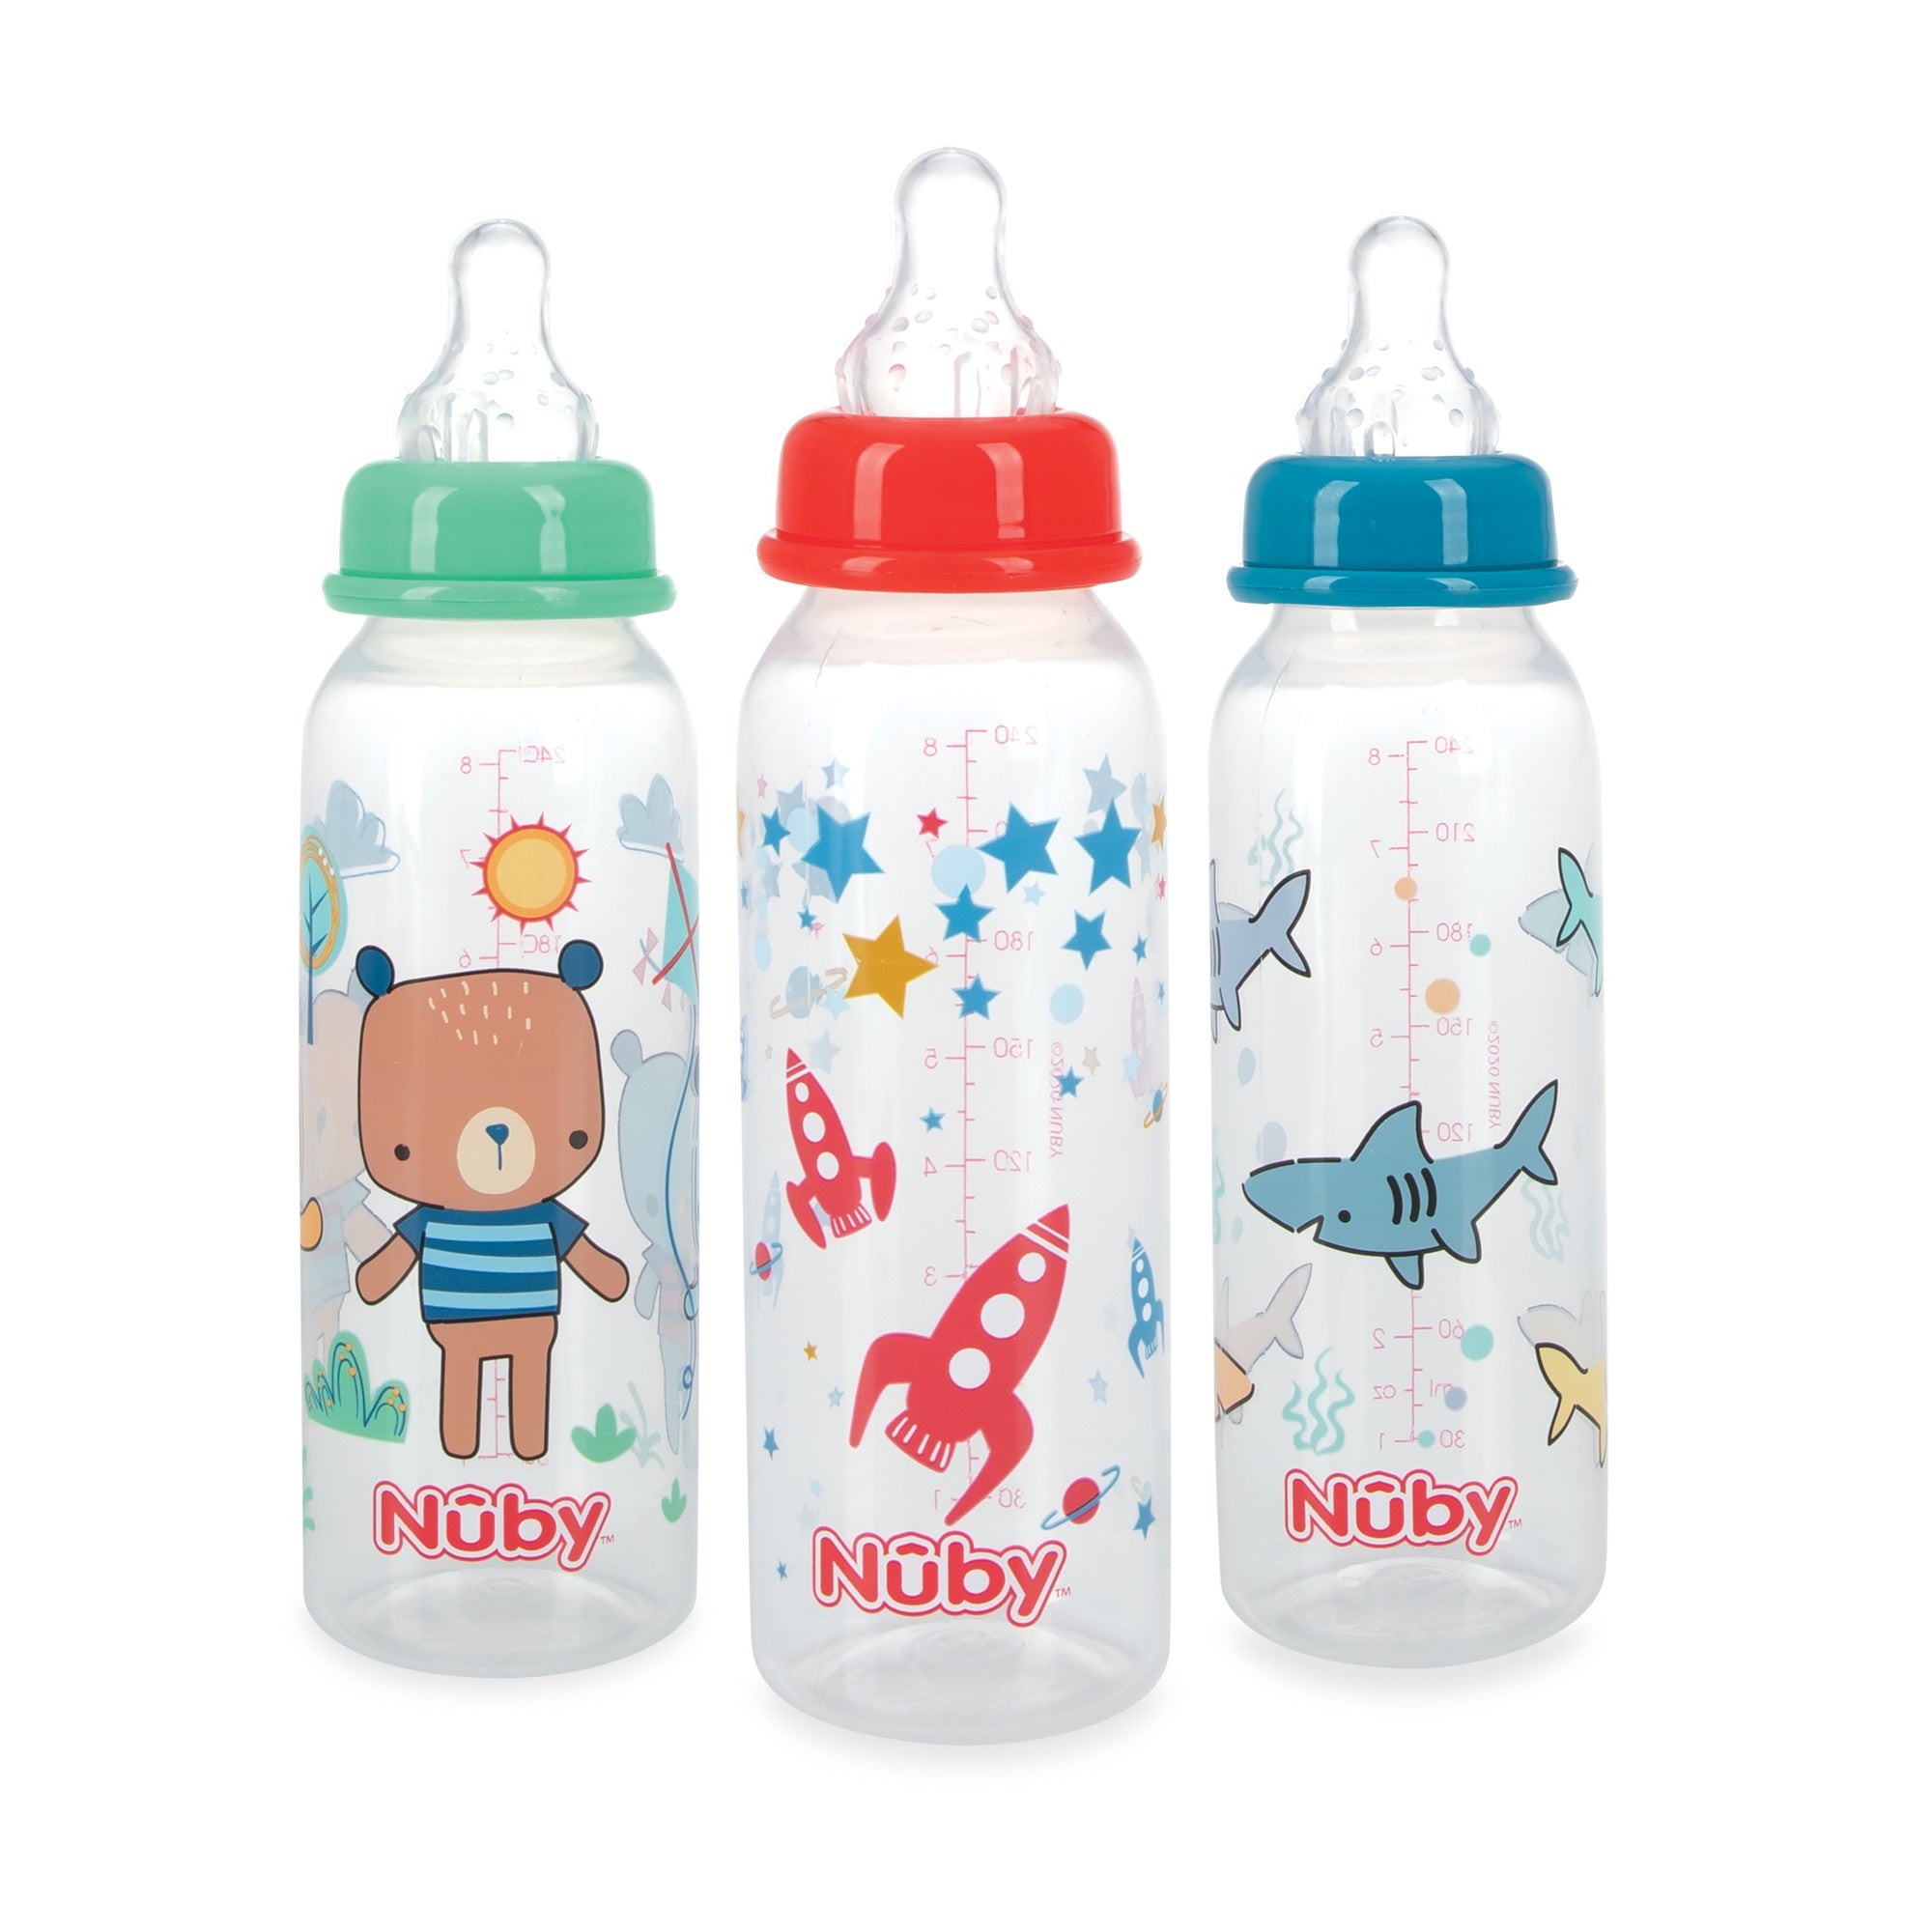 Nuby Infa-feeder Set - Walmart.com  Baby bottles, Baby feeding bottles,  Baby feeding